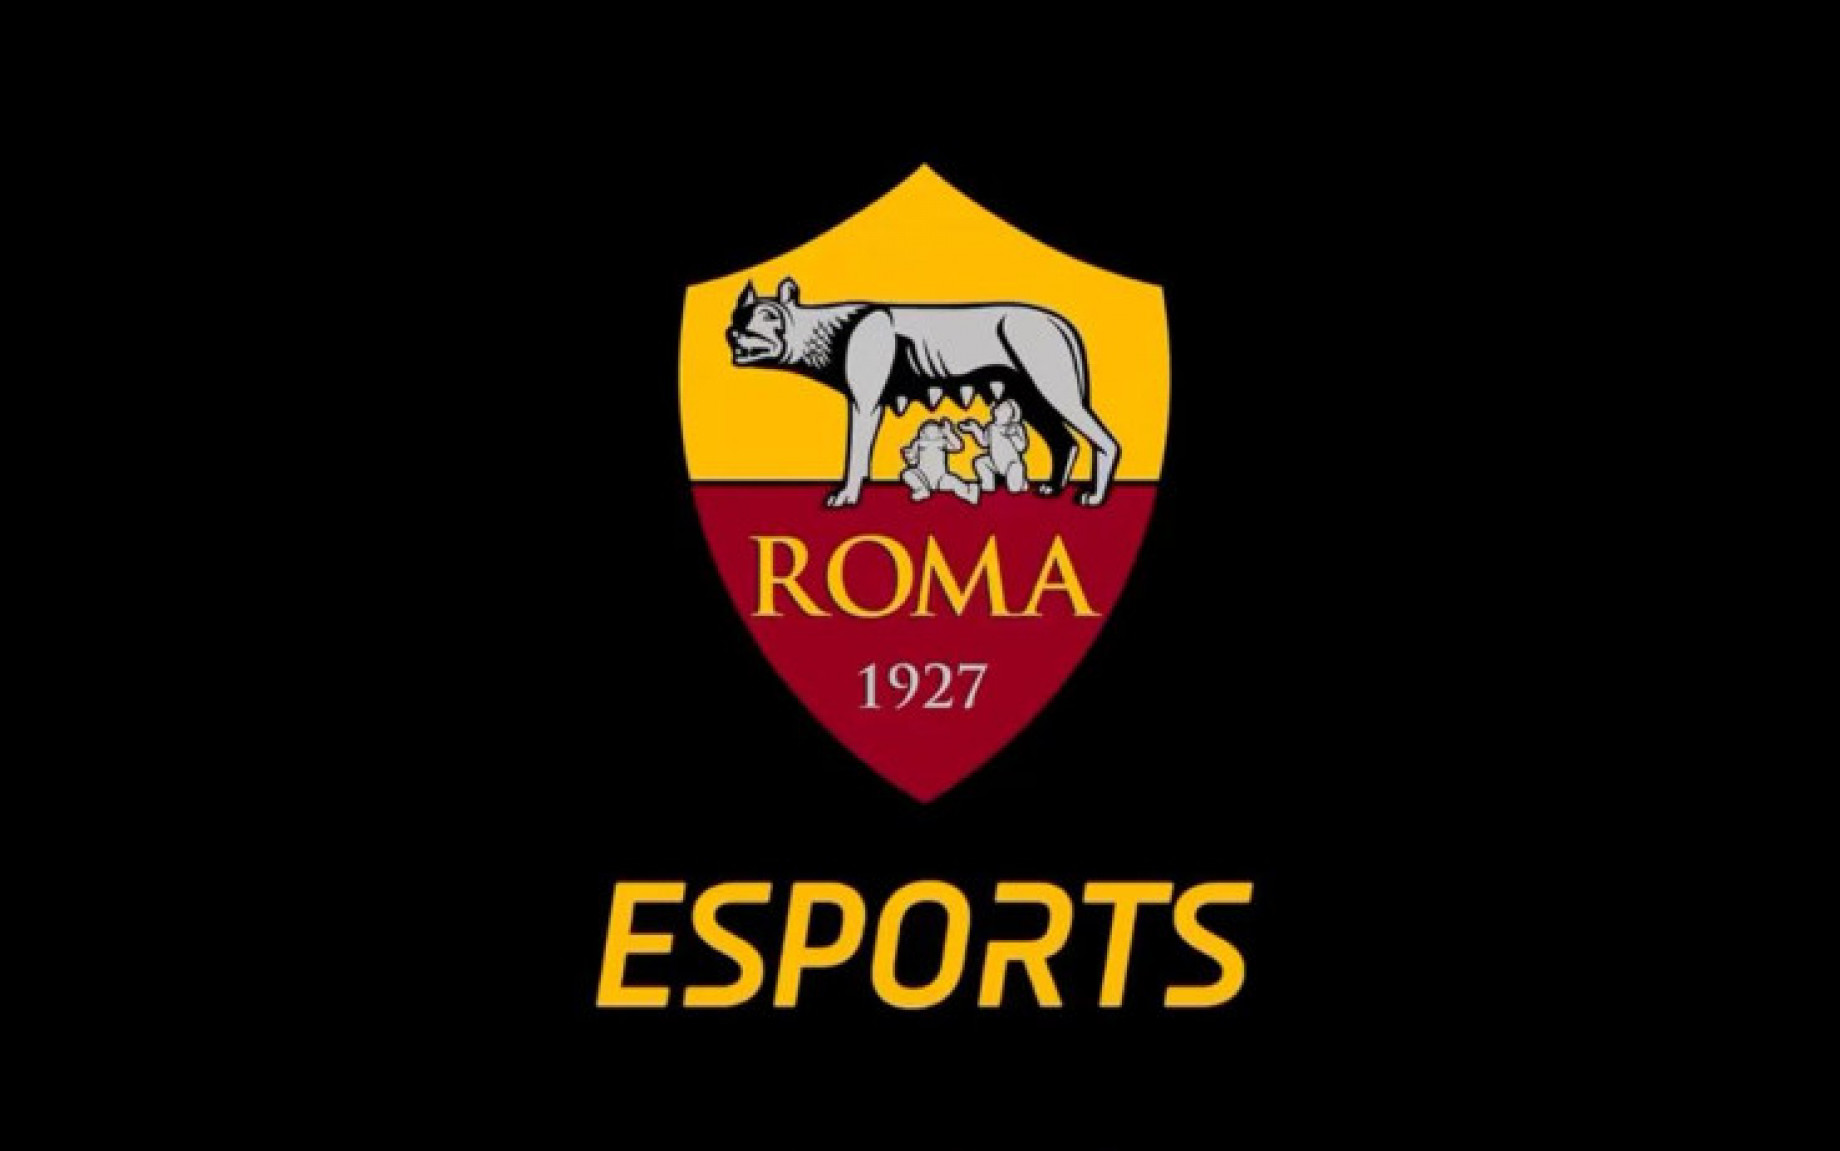 Roma_Esports_logo_screen_GDM.jpg